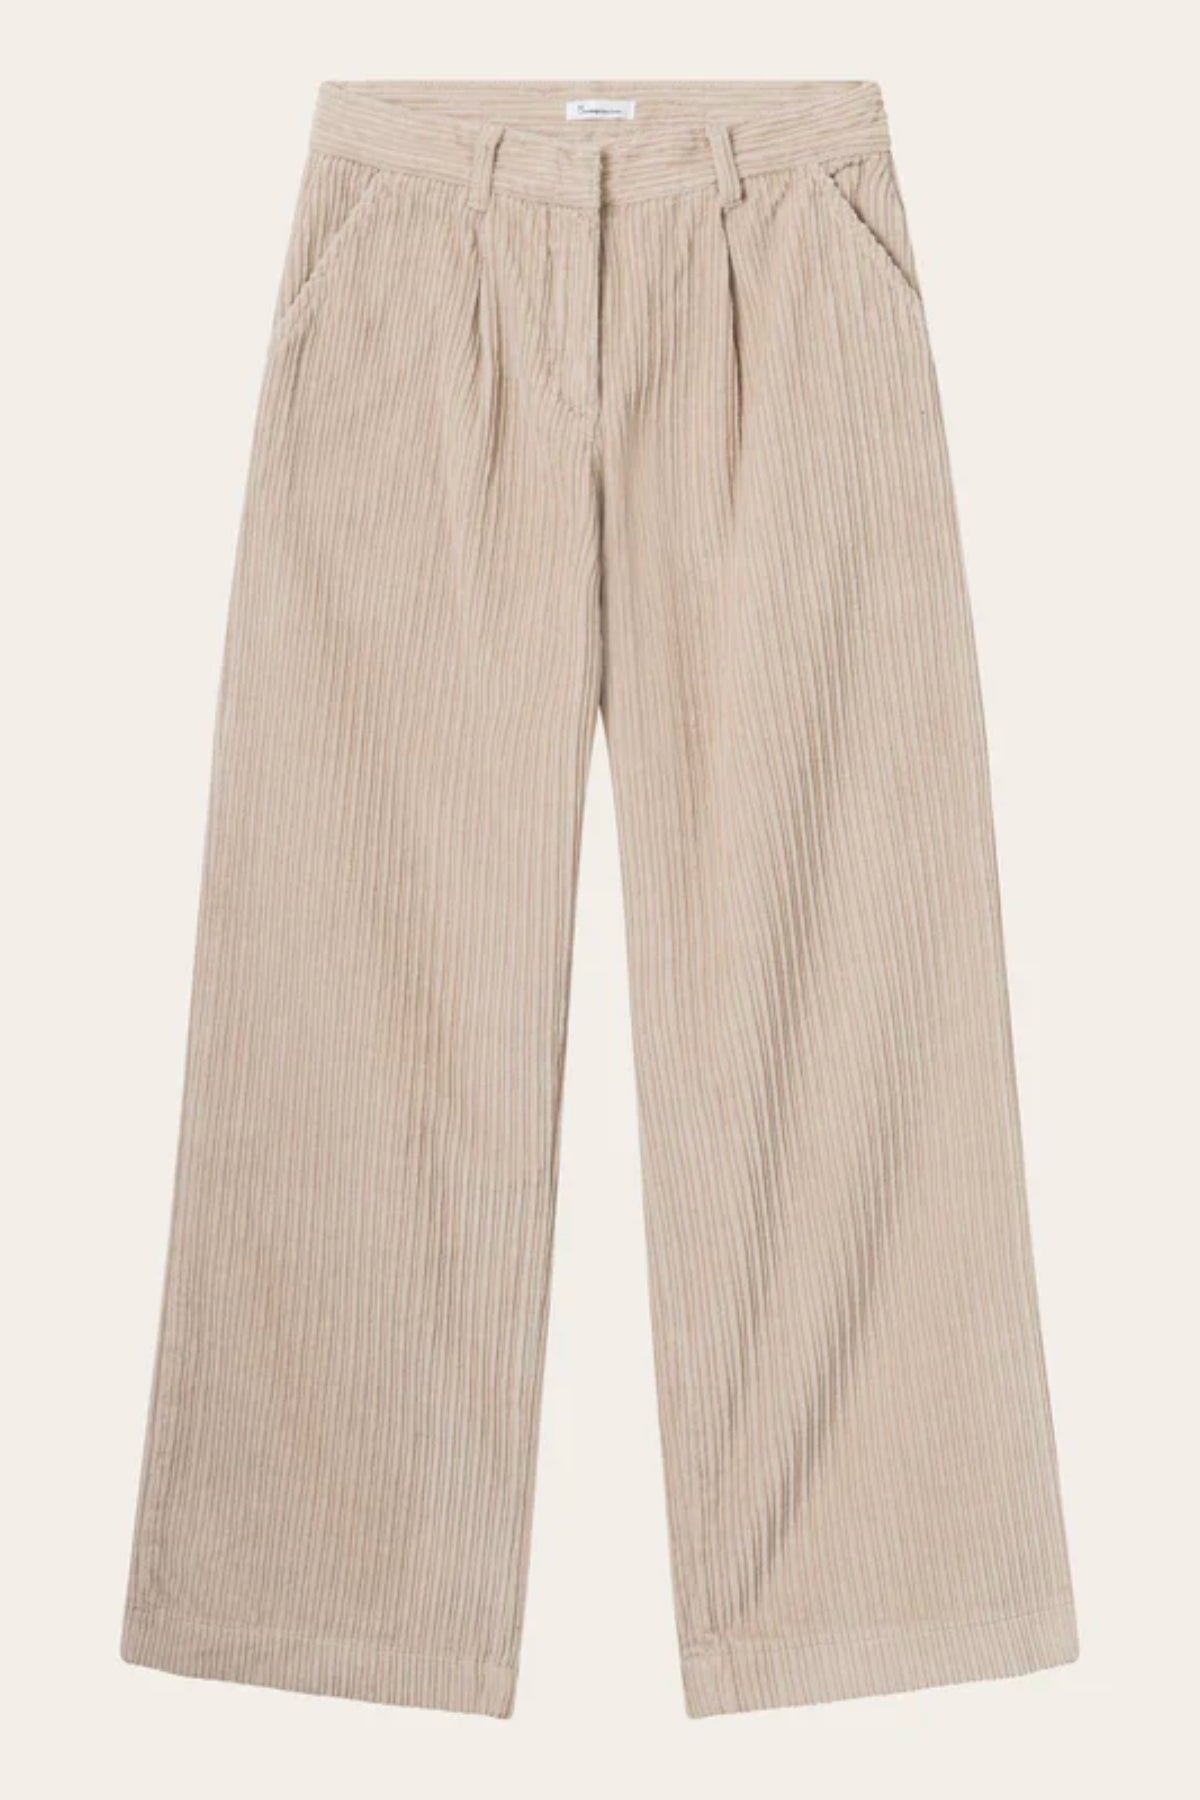 Pantalon posey wide high-rise irregular corduroy - Knowledge Cotton Apparel